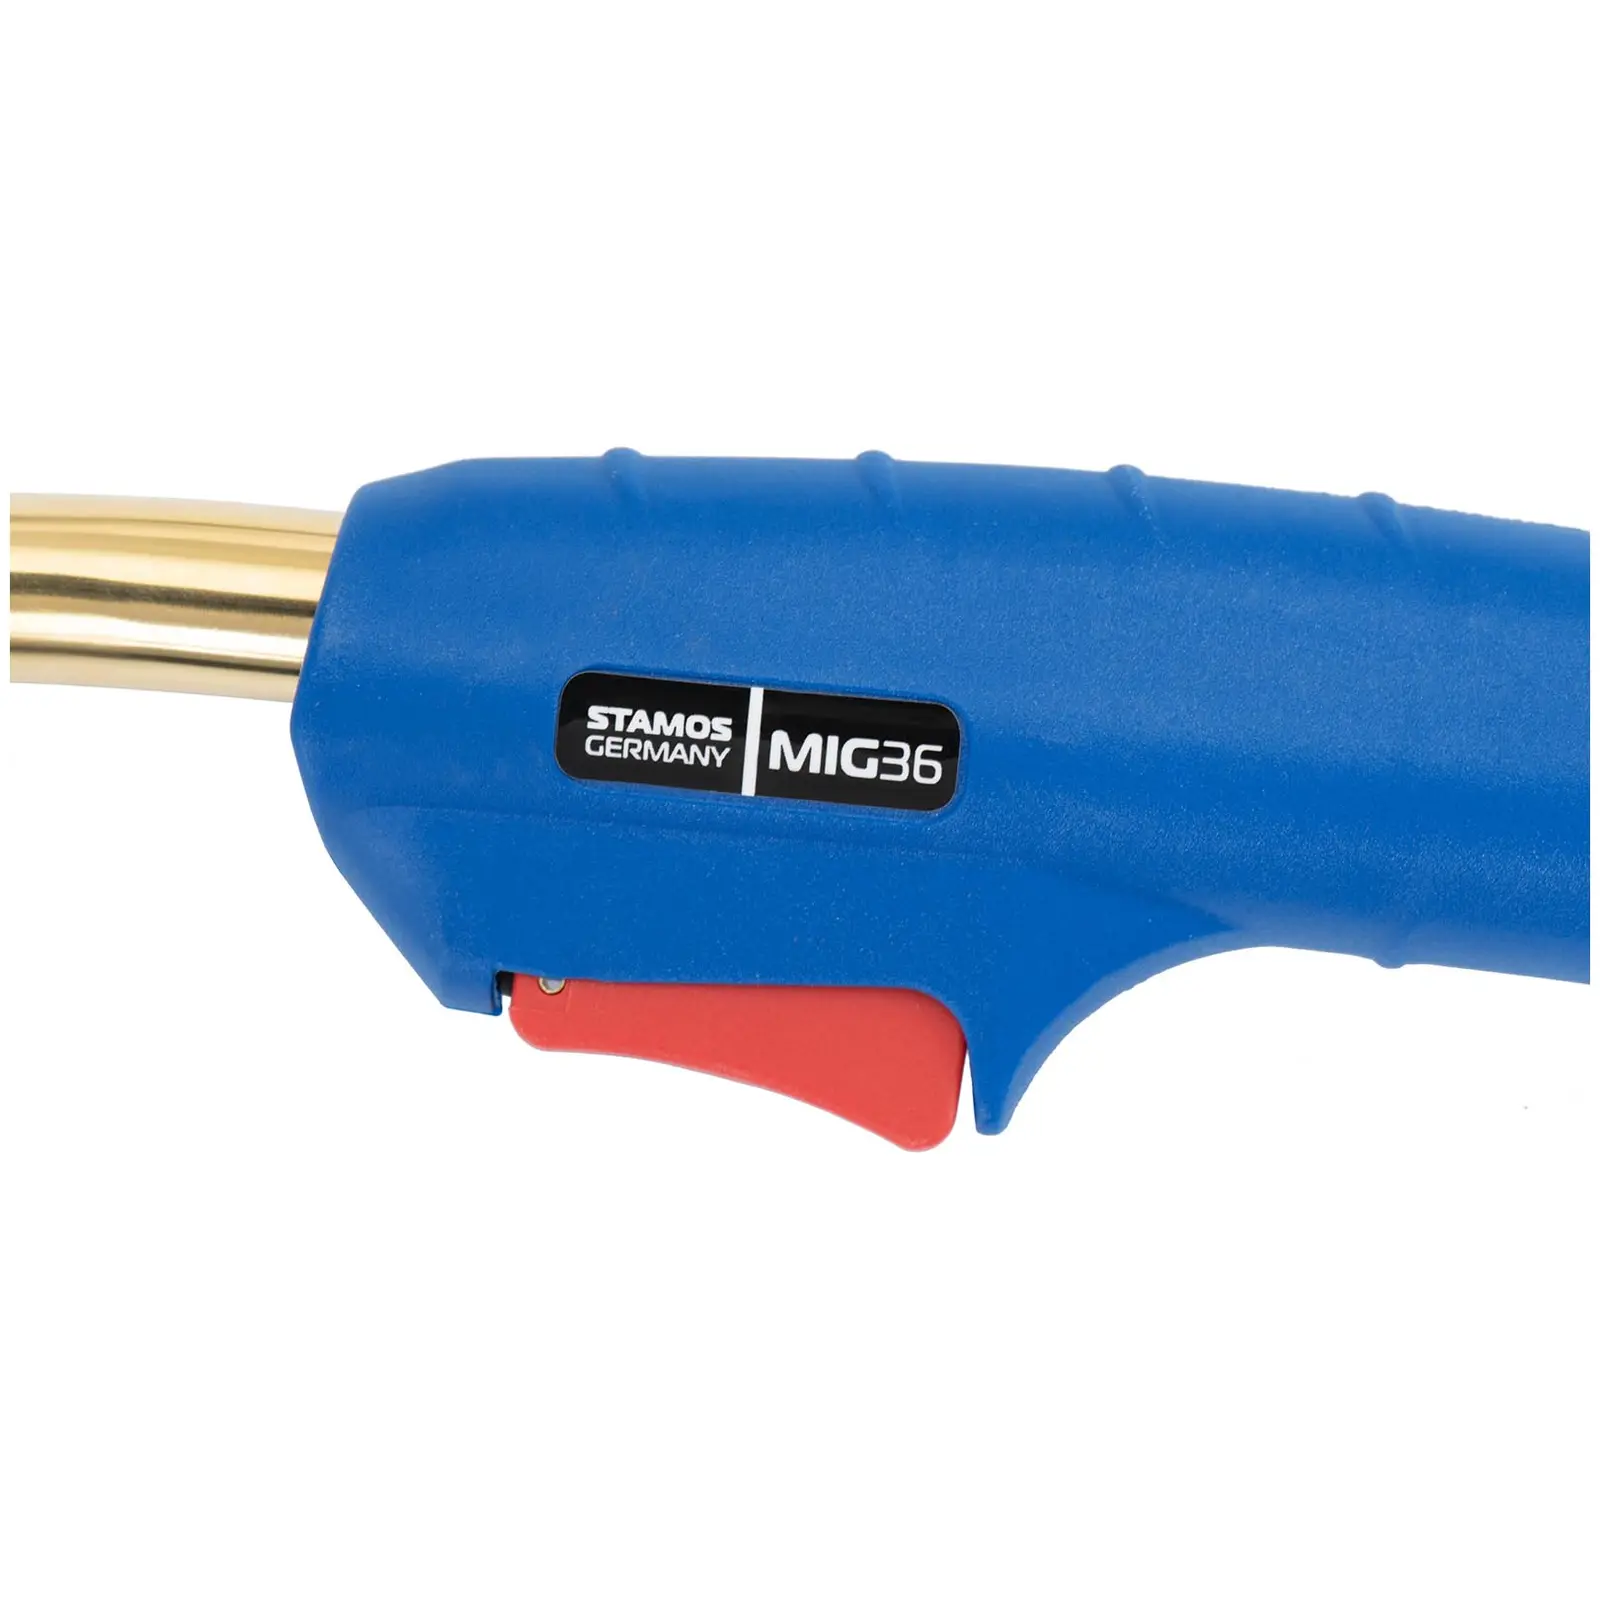 MIG MAG sveisebrenner - MIG36 - 4m x 35mm² - 340A CO2 / 300A blandet gass